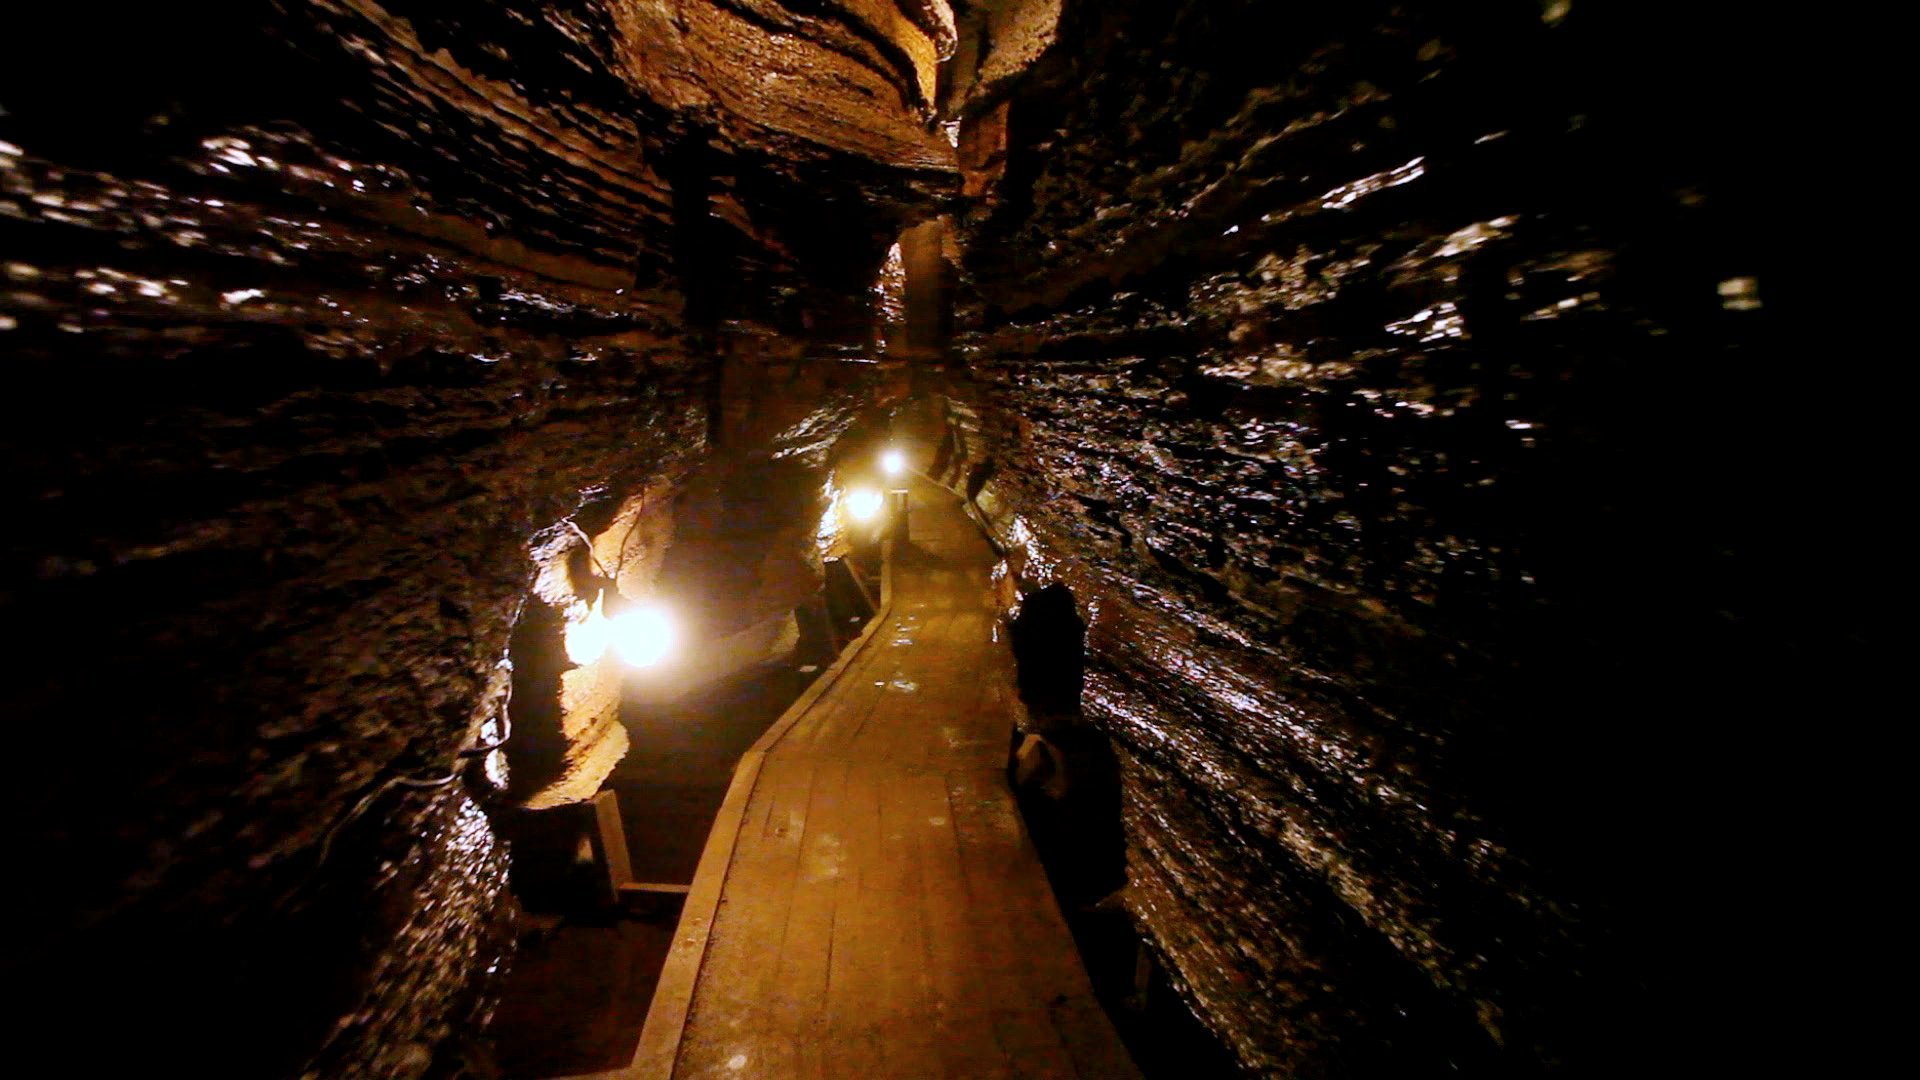 Interior of Bonnechere caves